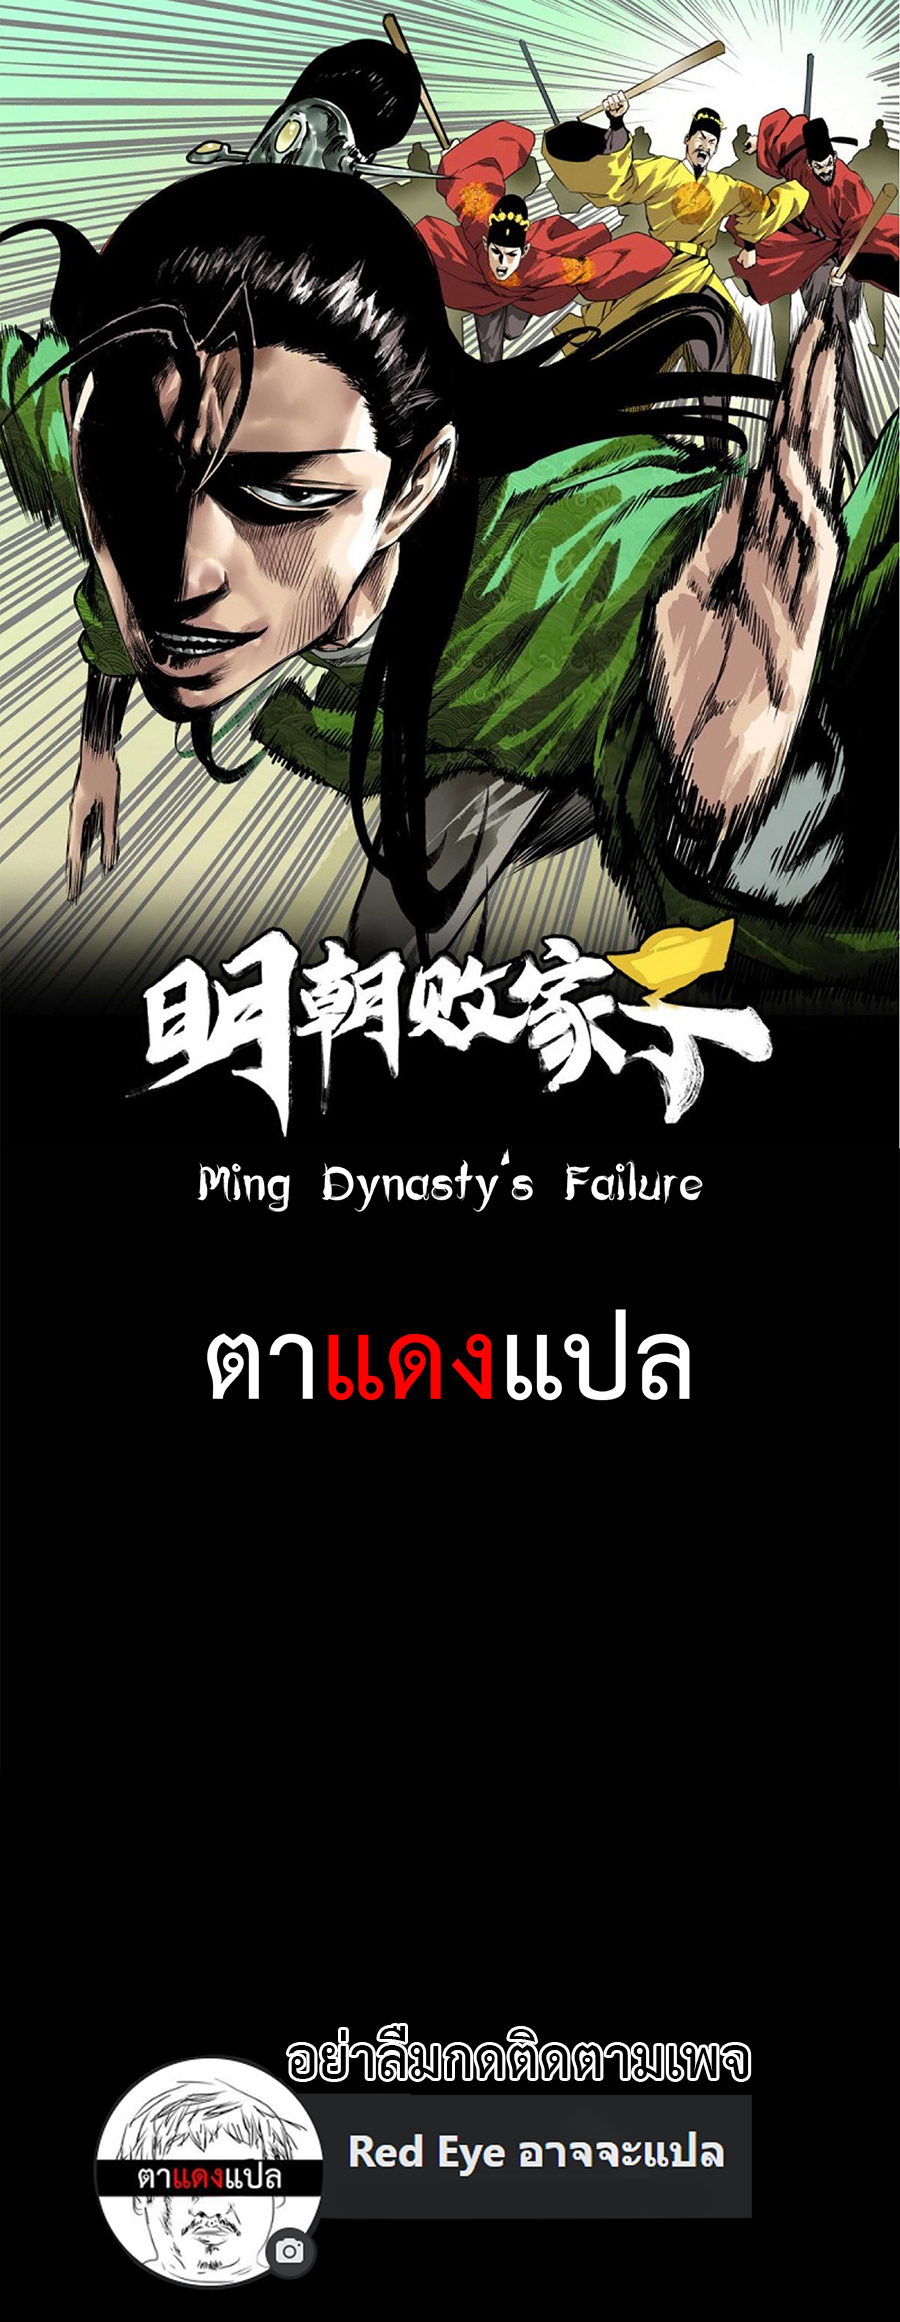 Ming Dynasty's Failure 45 (1)